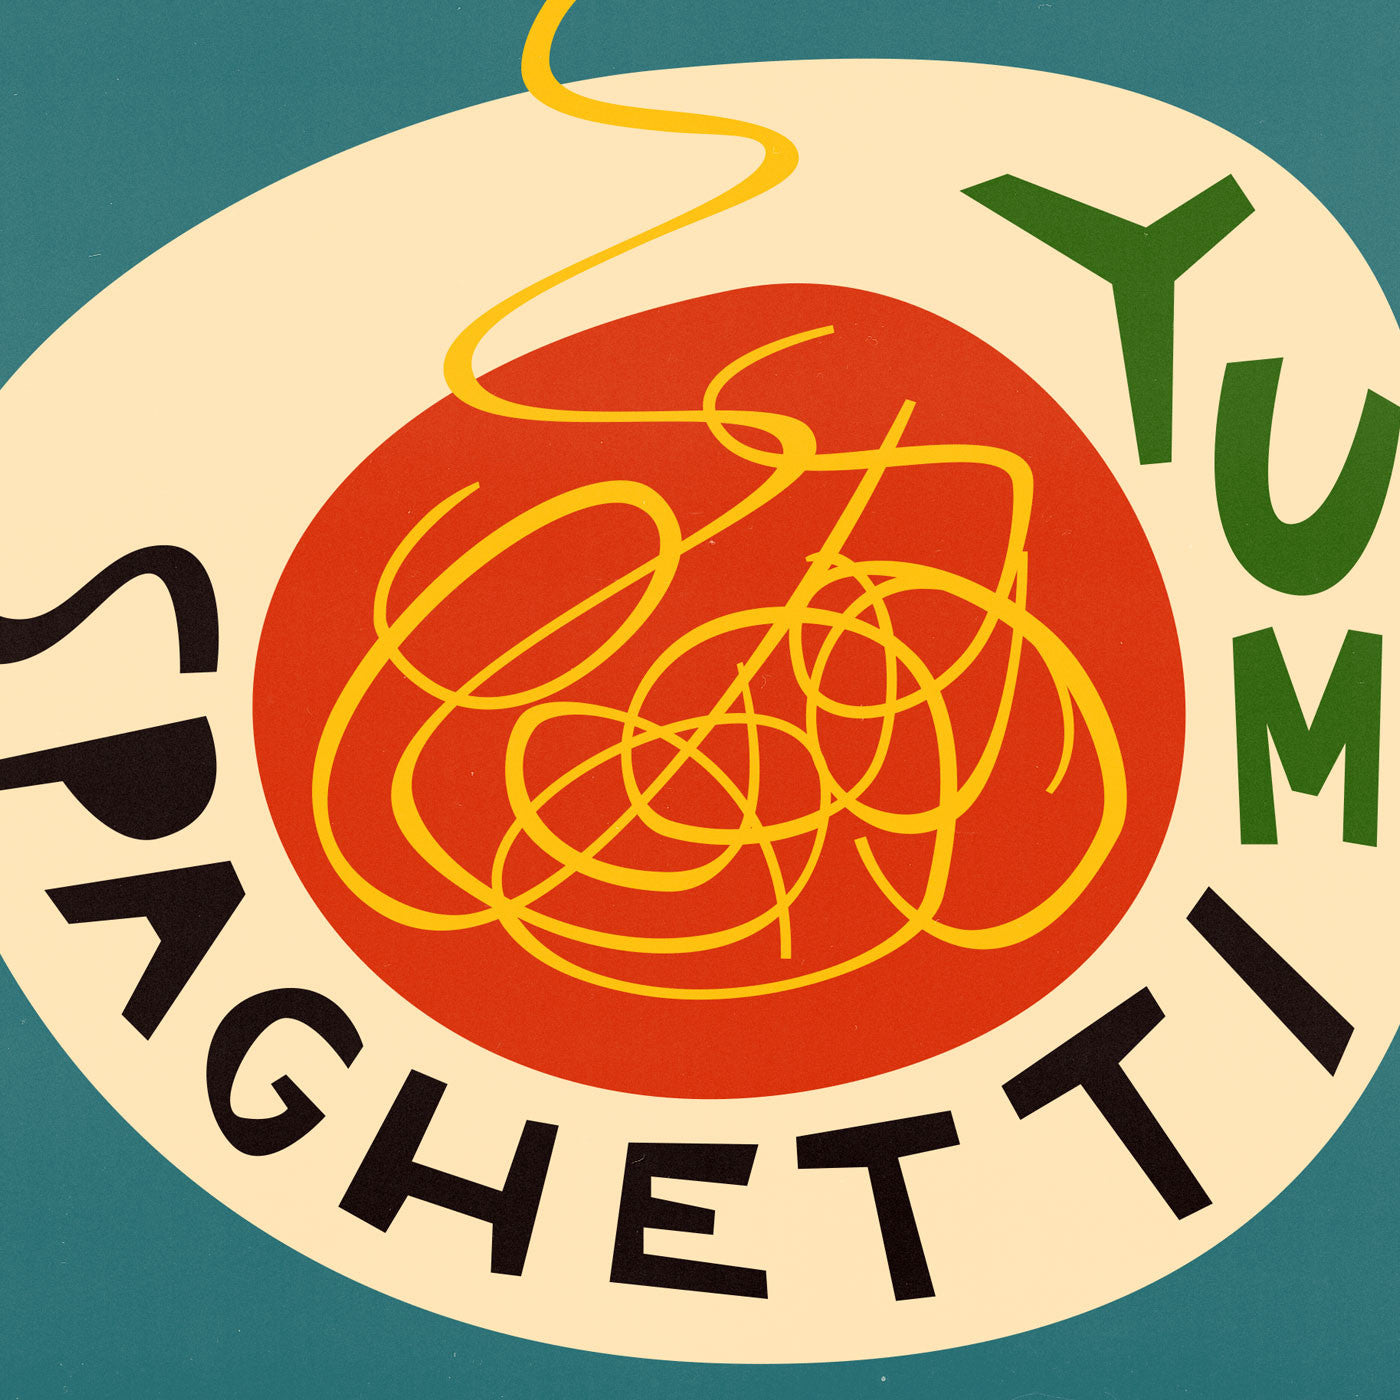 Abstract spaghetti food art